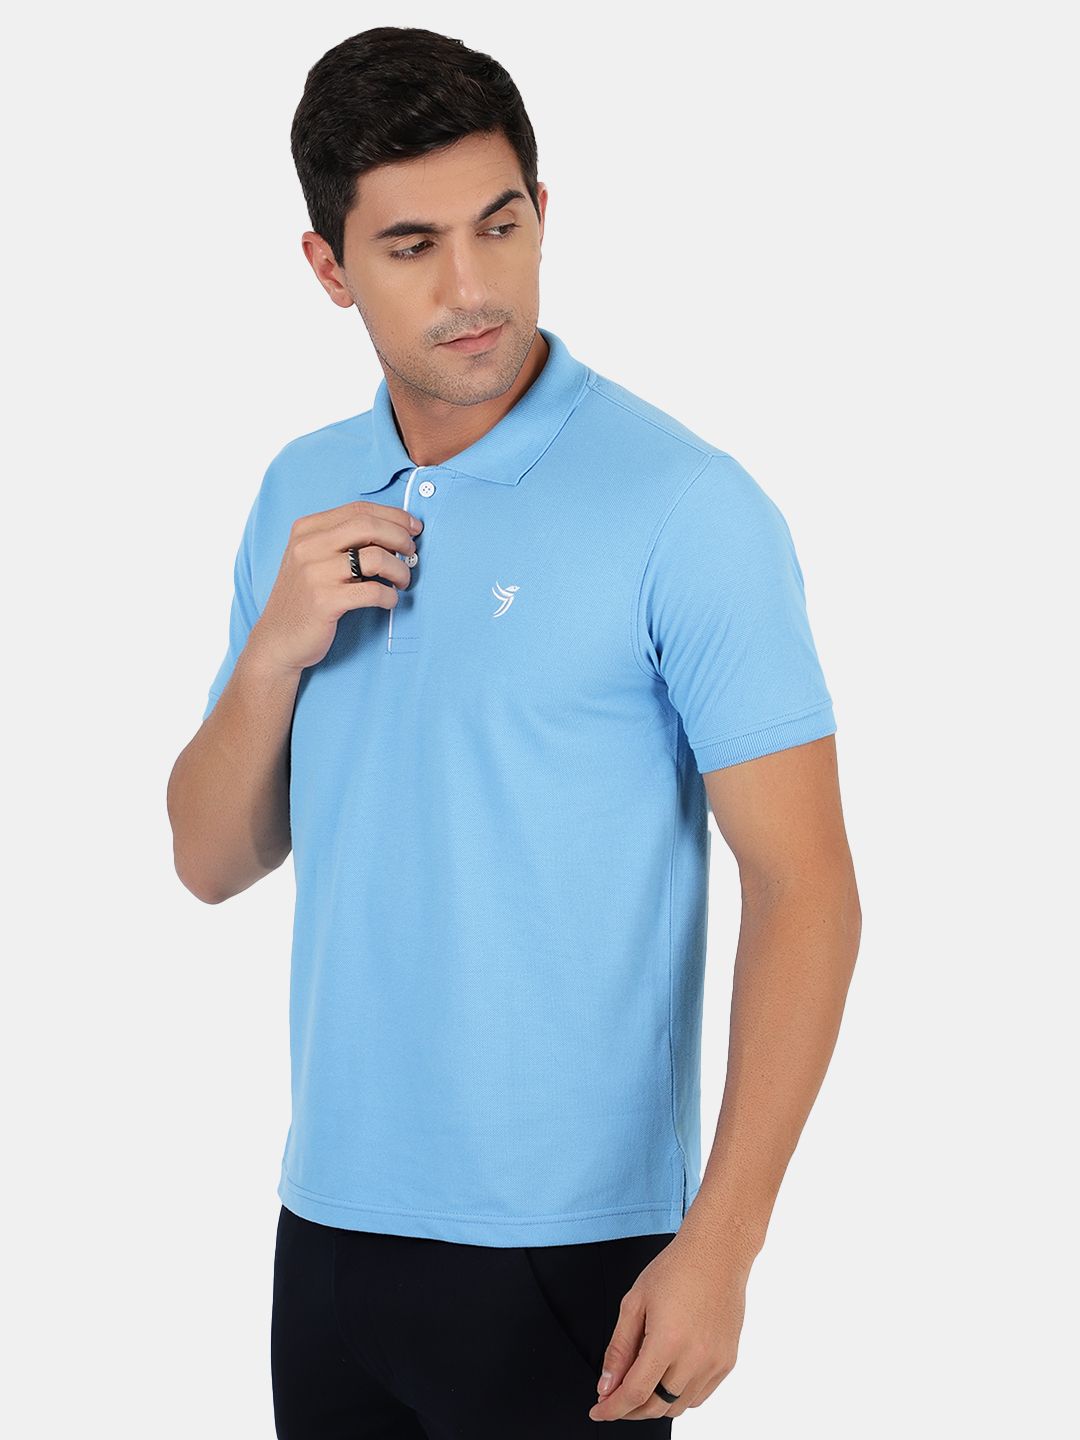 Mentoos Men Poly Cotton Solid Regular Fit Collar Neck Half Sleeves Polo T-Shirt Light Blue Mentoos